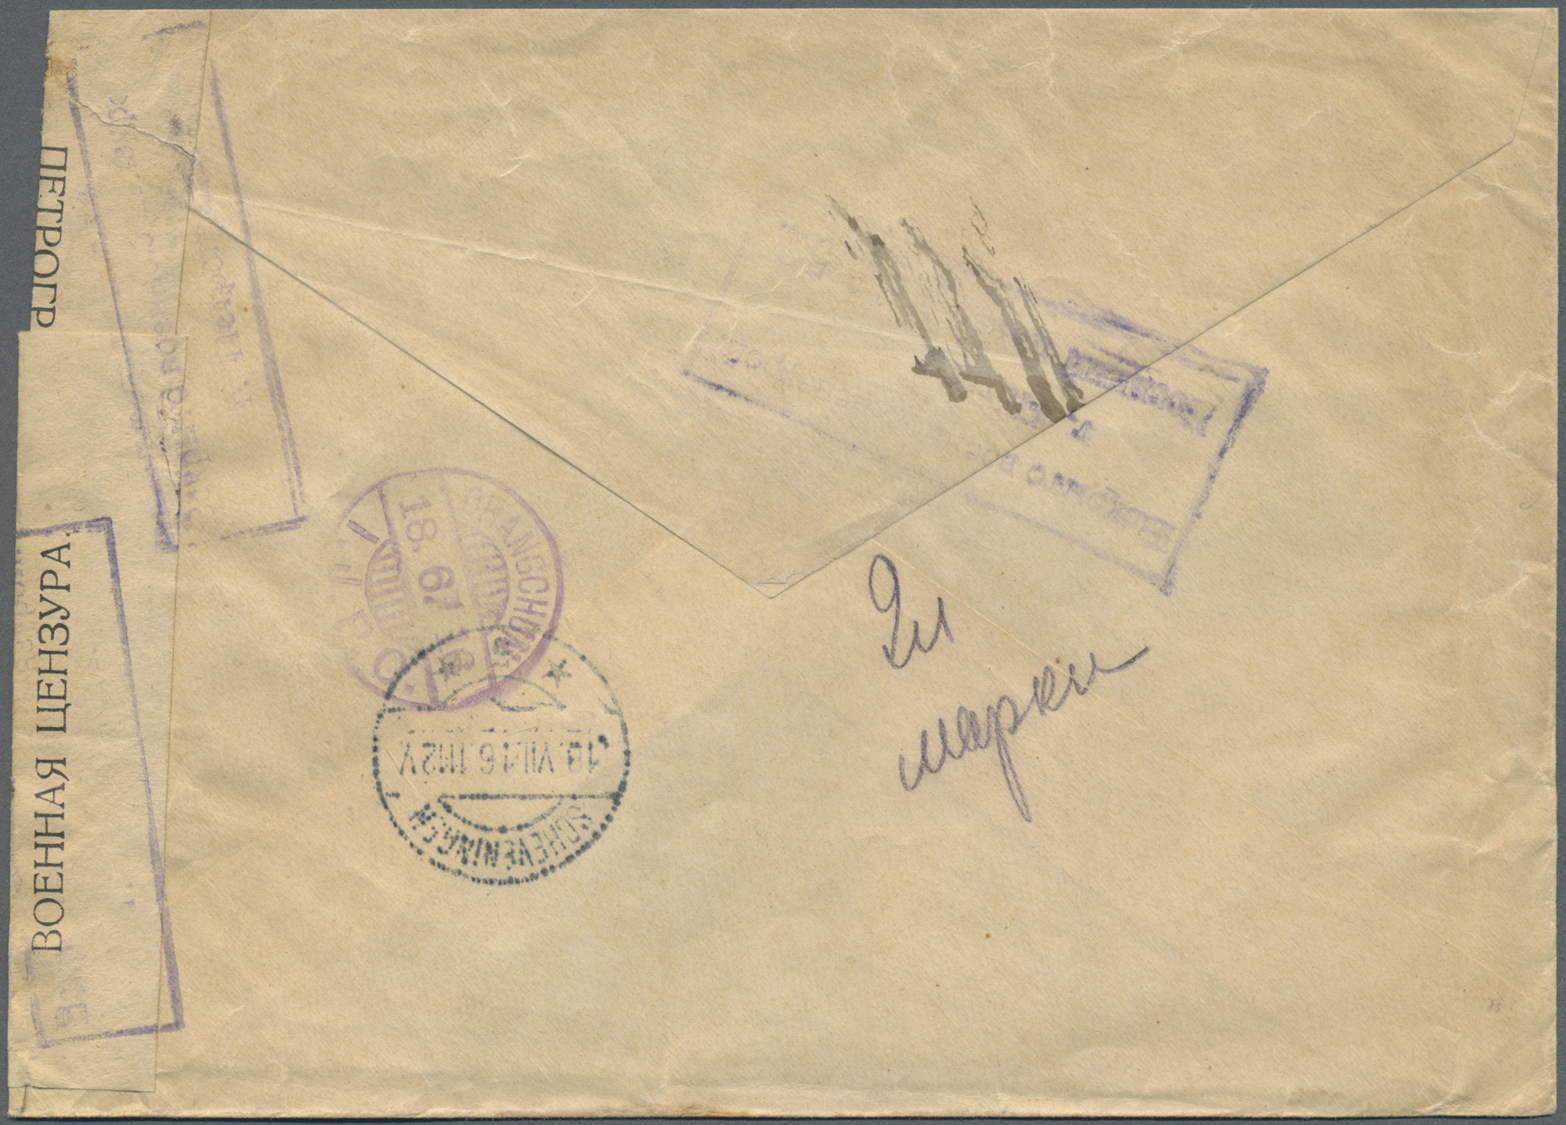 Br Japanische Post In China: 1916. Registered Envelope Addressed To Holland Bearing Japanese Post Office In Shanghai SG - 1943-45 Shanghai & Nankin